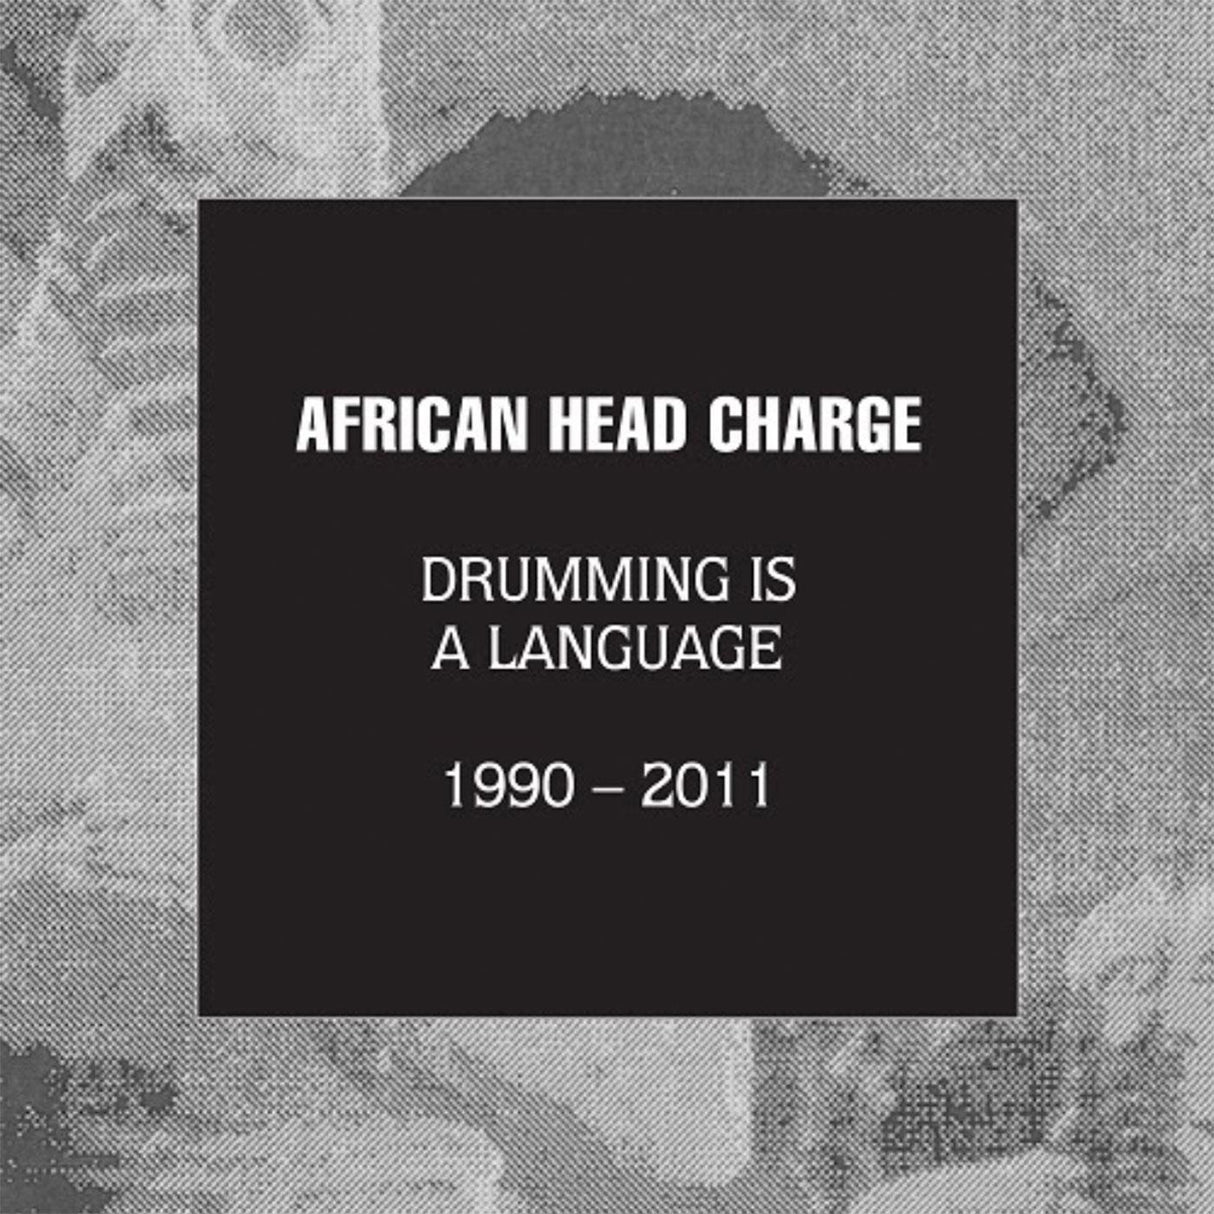 Drumming Is A Language 1990 - 2011 [CD]